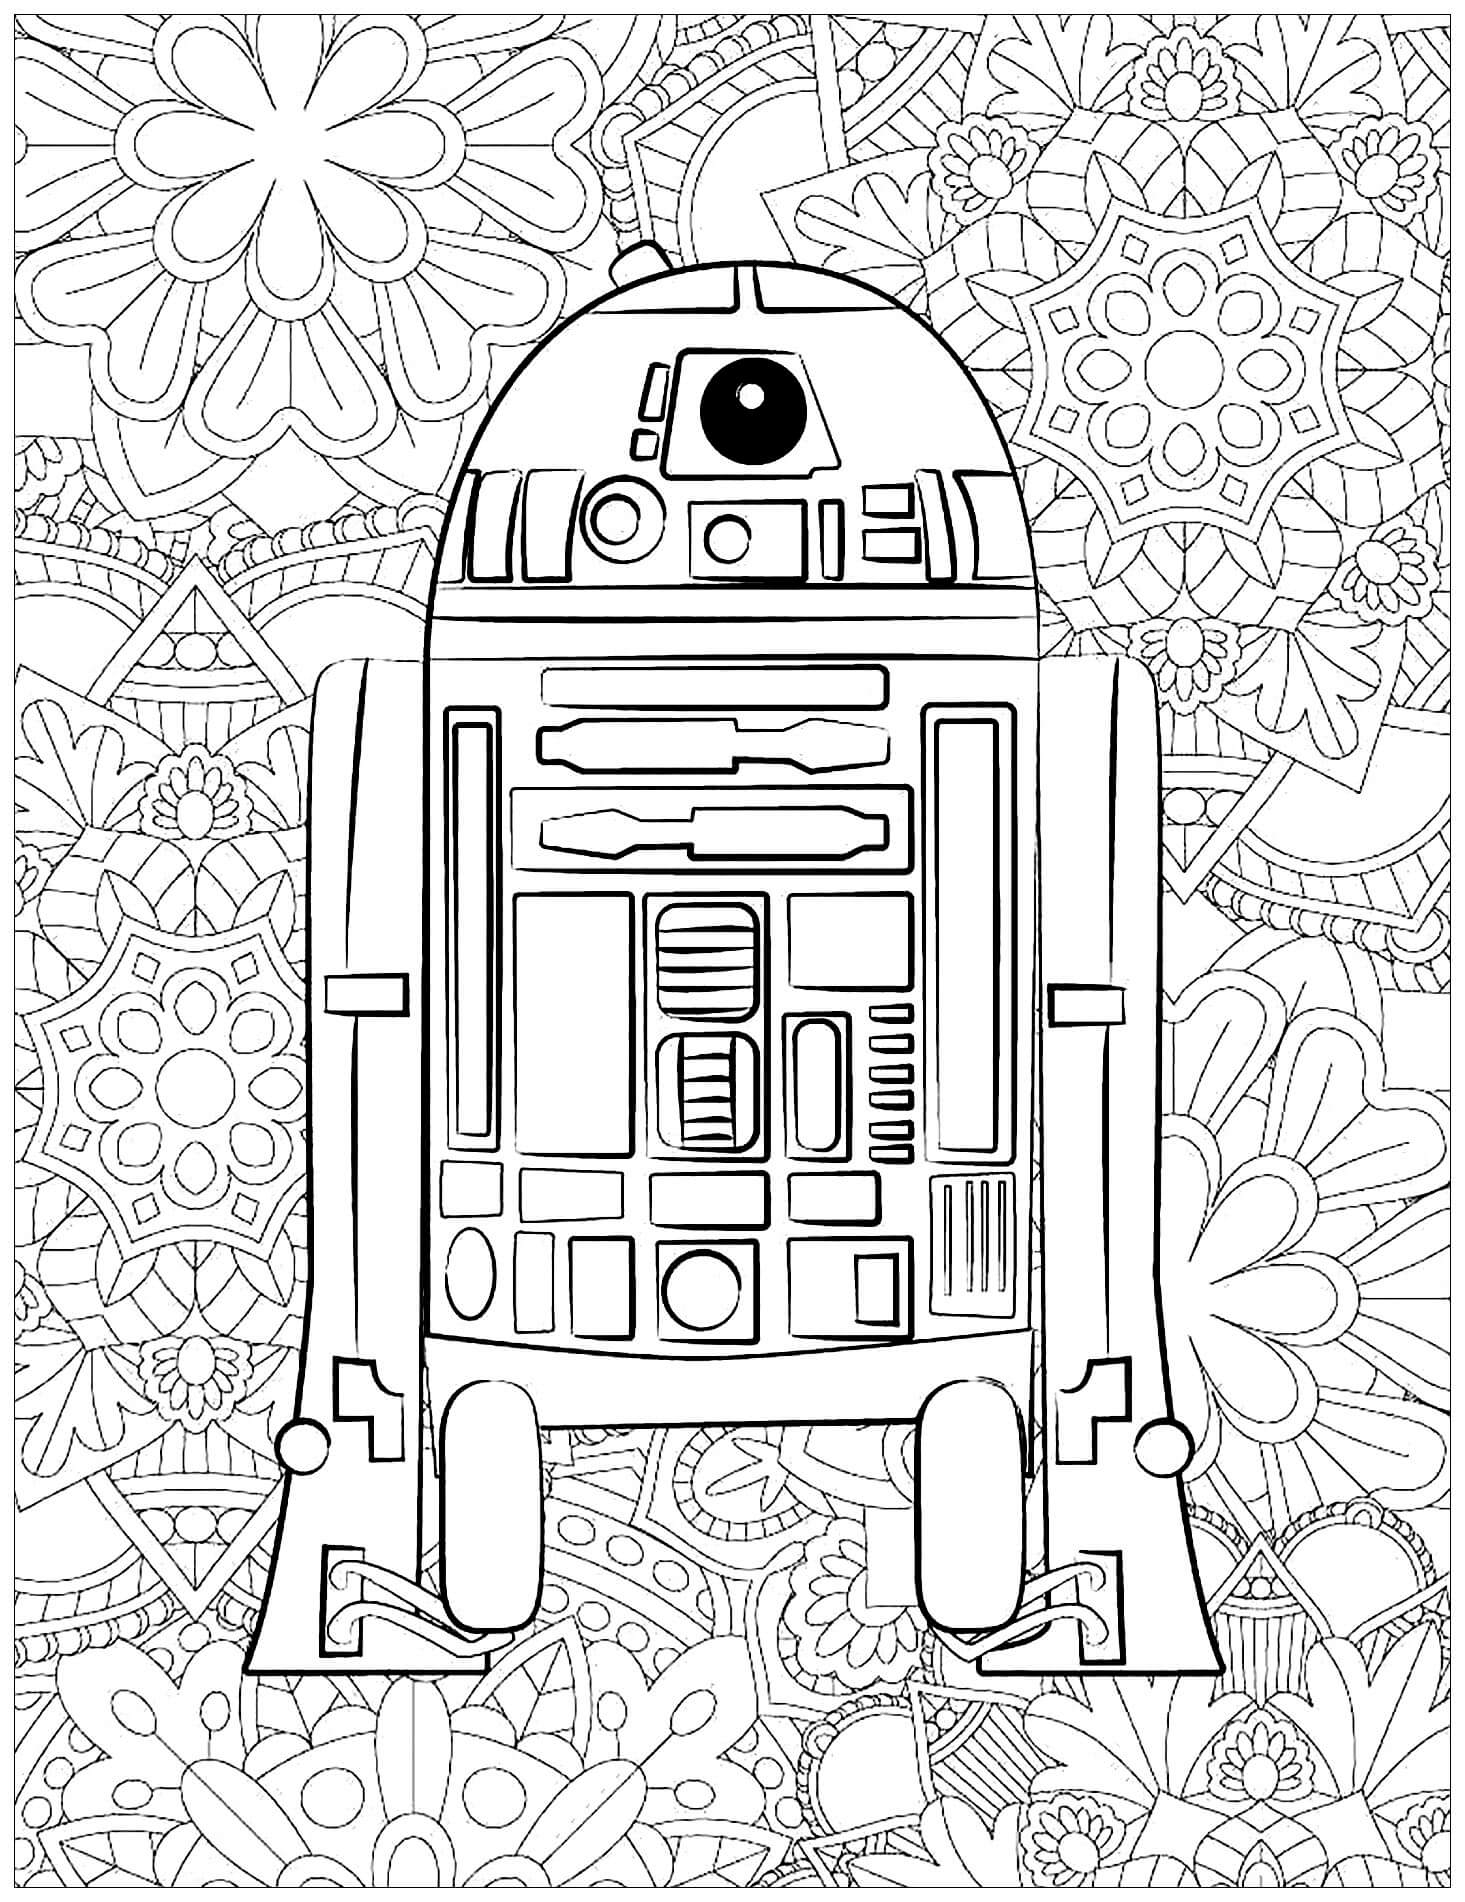 Coloriage R2-D2 Star Wars